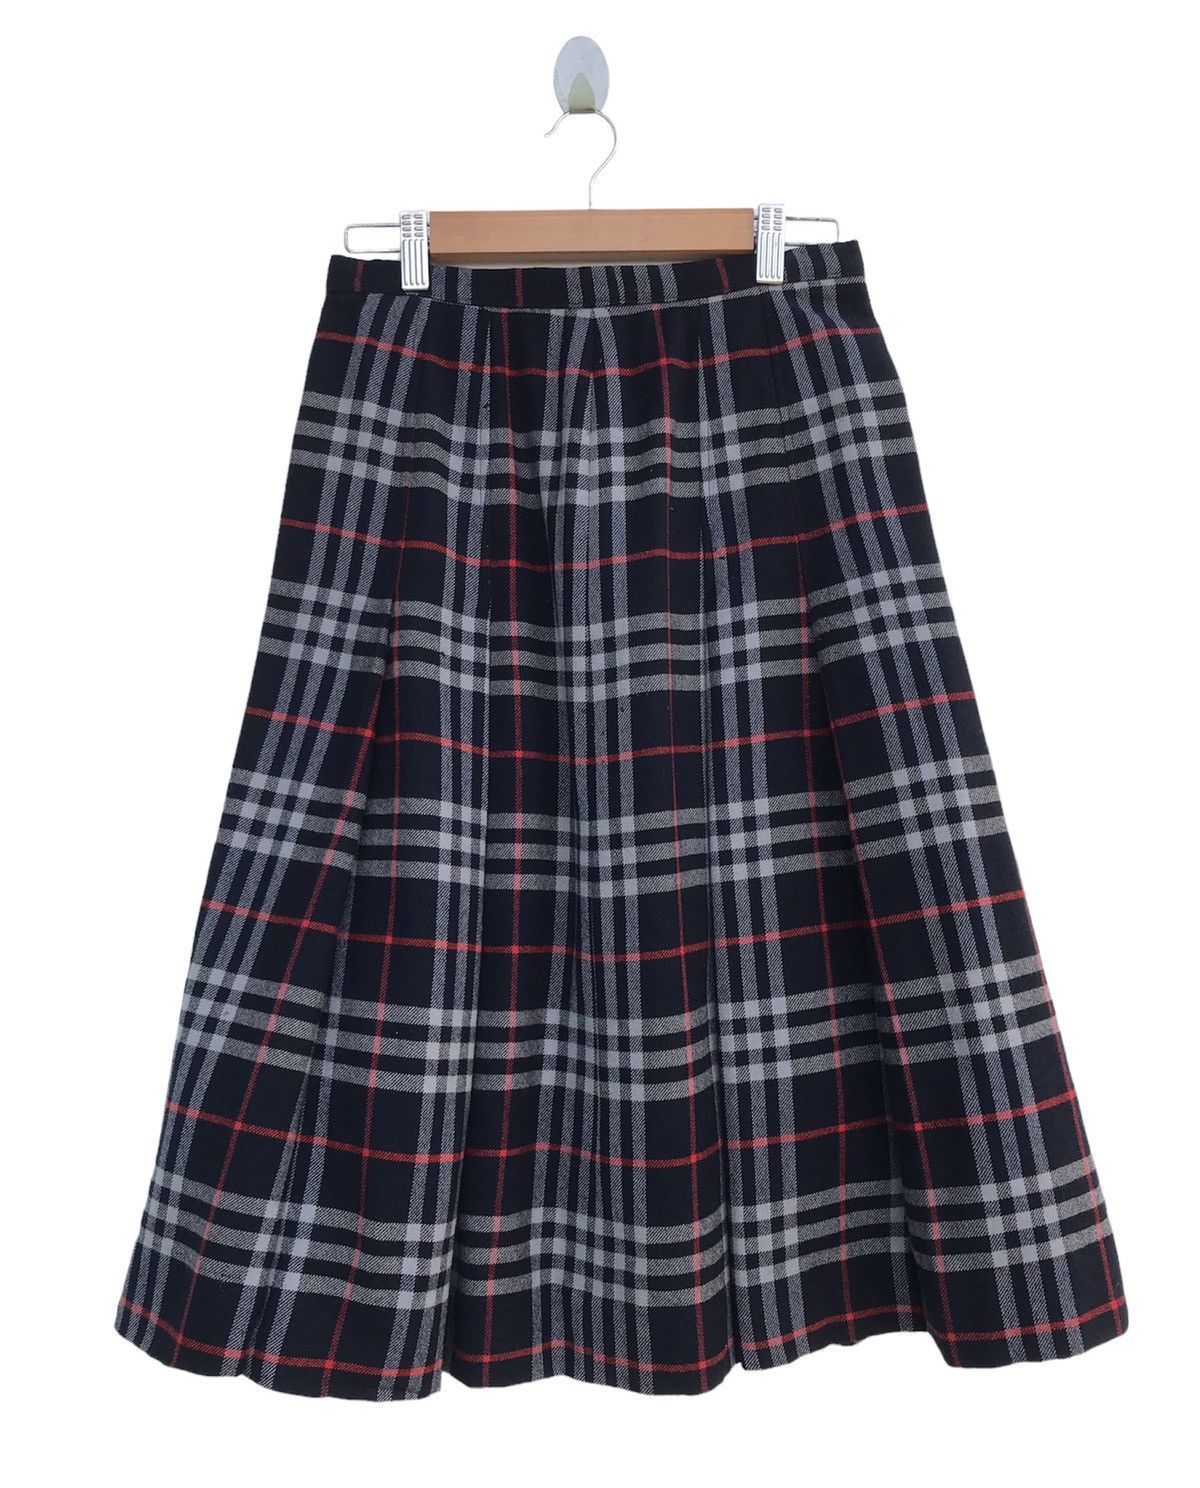 Burberry Nova Check Skirt - 2